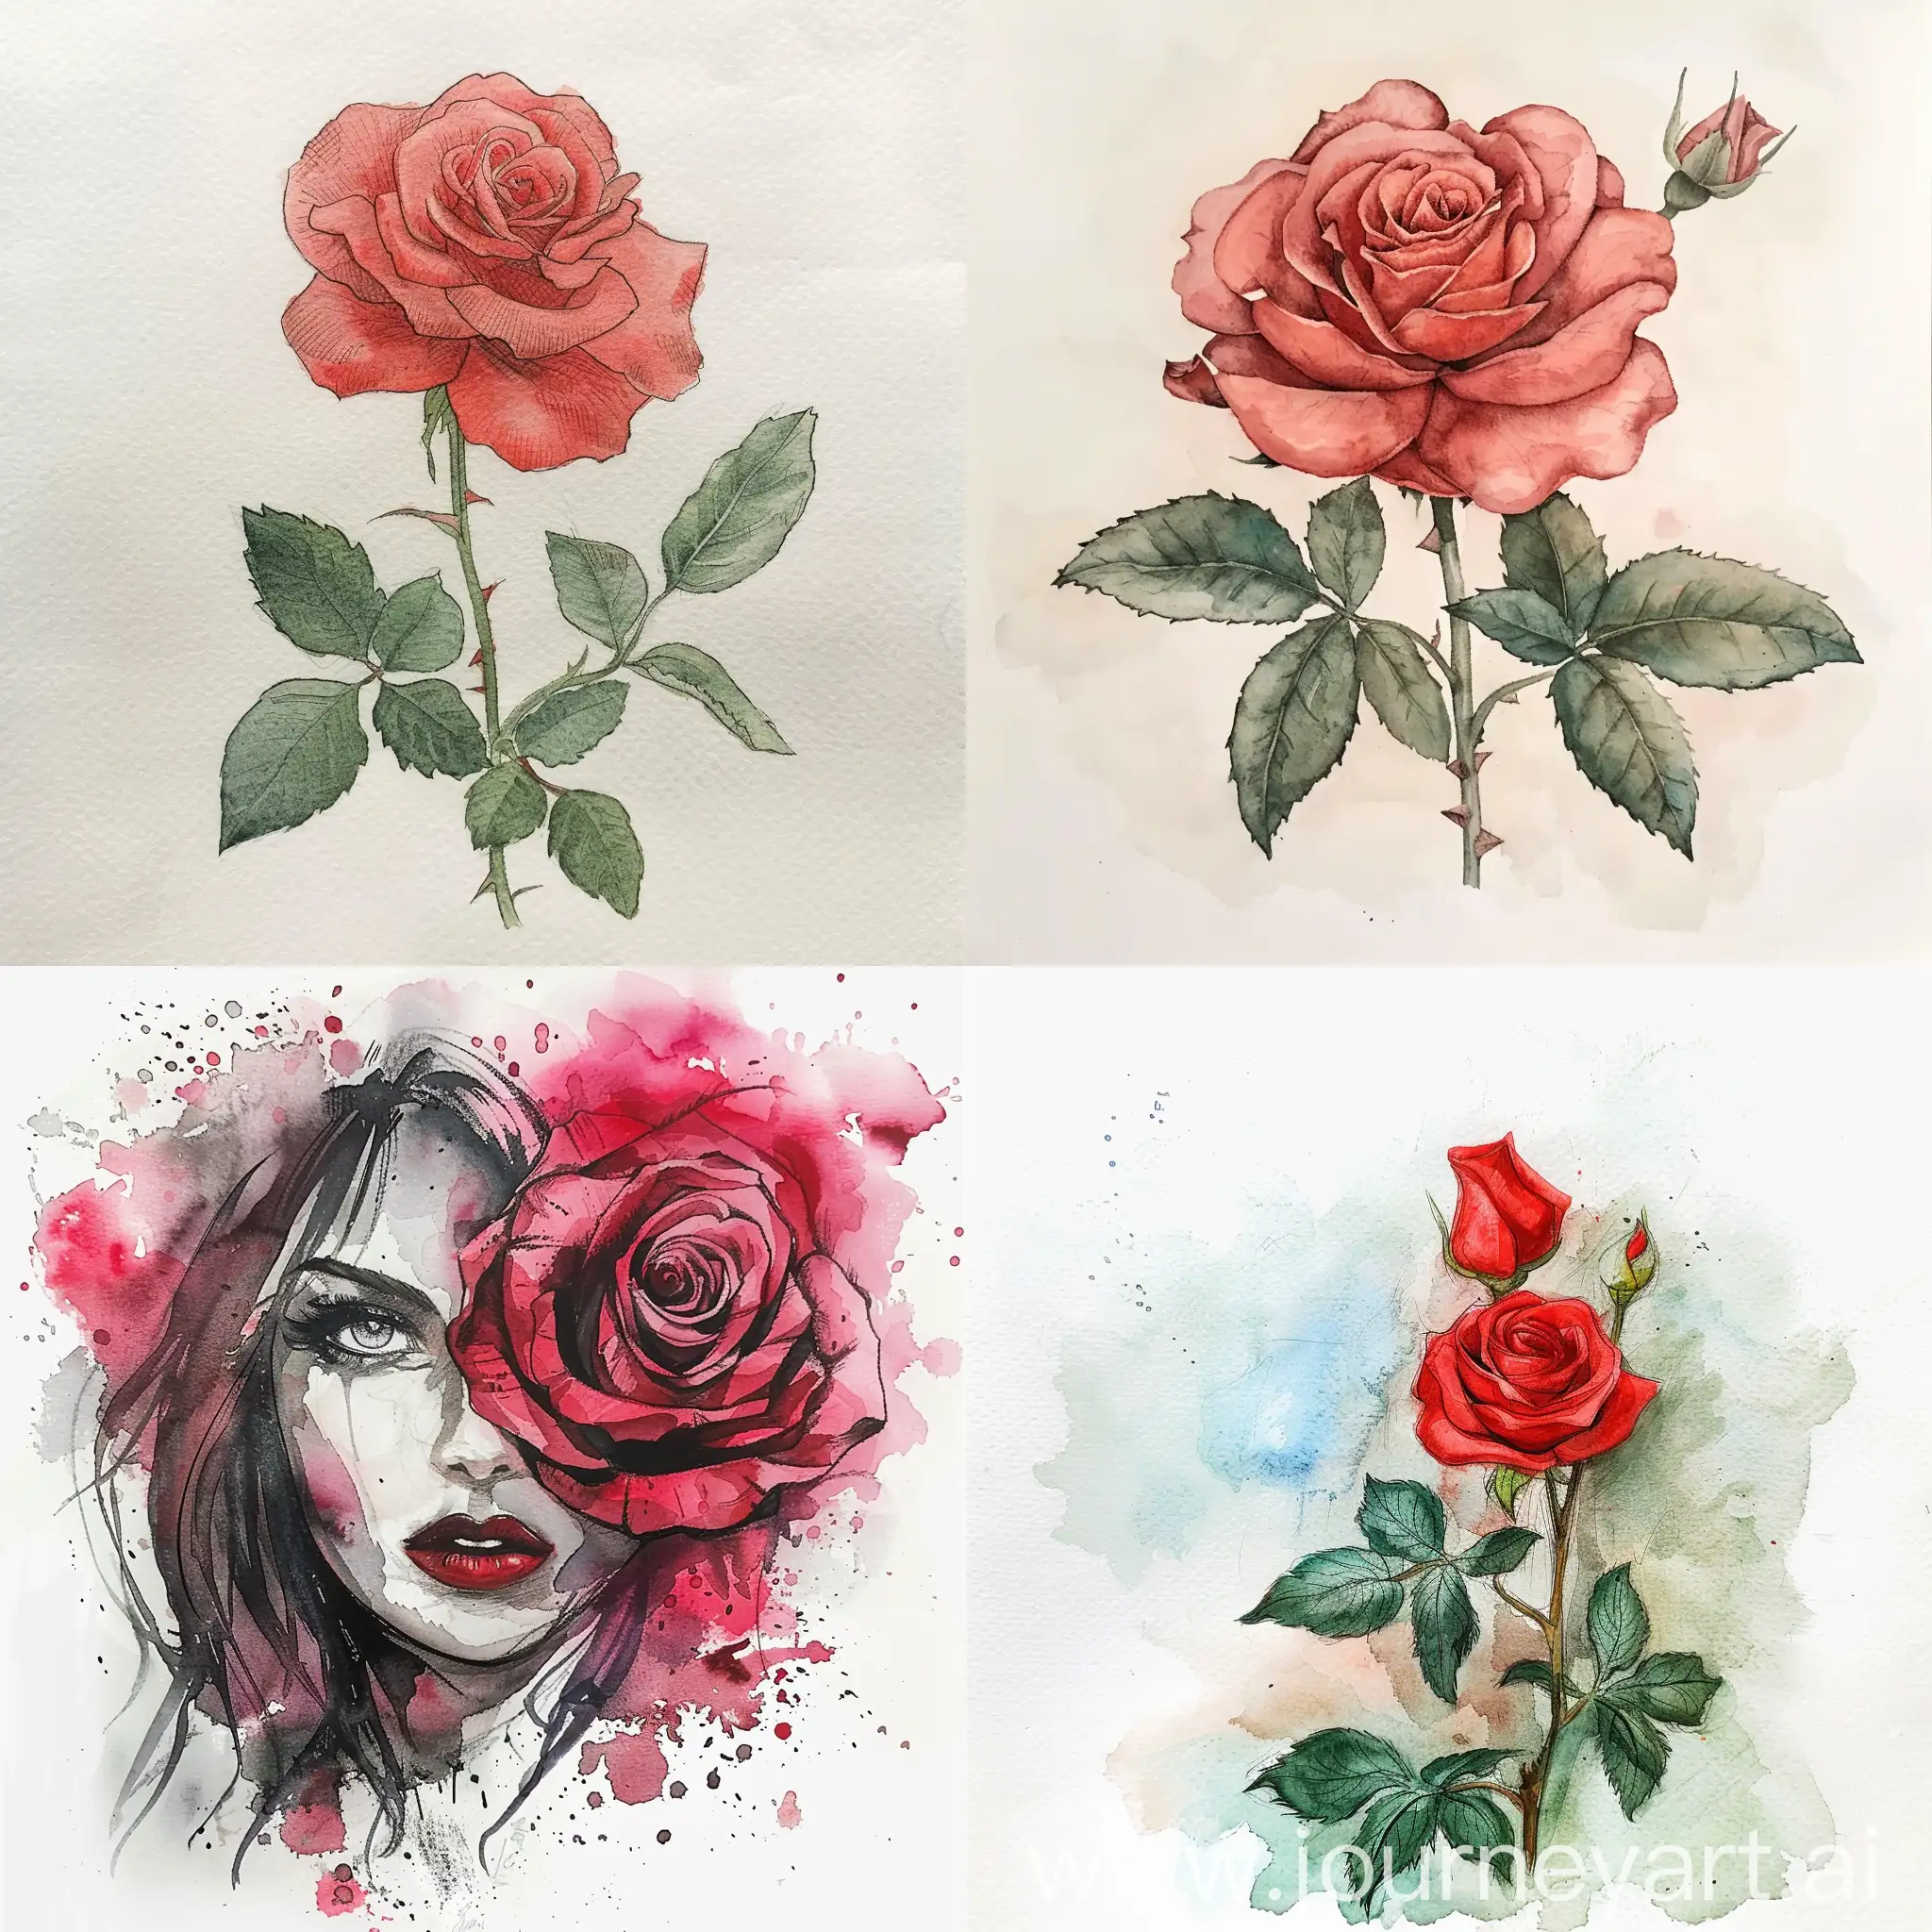 Elegant-Lady-Rose-Sketch-in-Watercolor